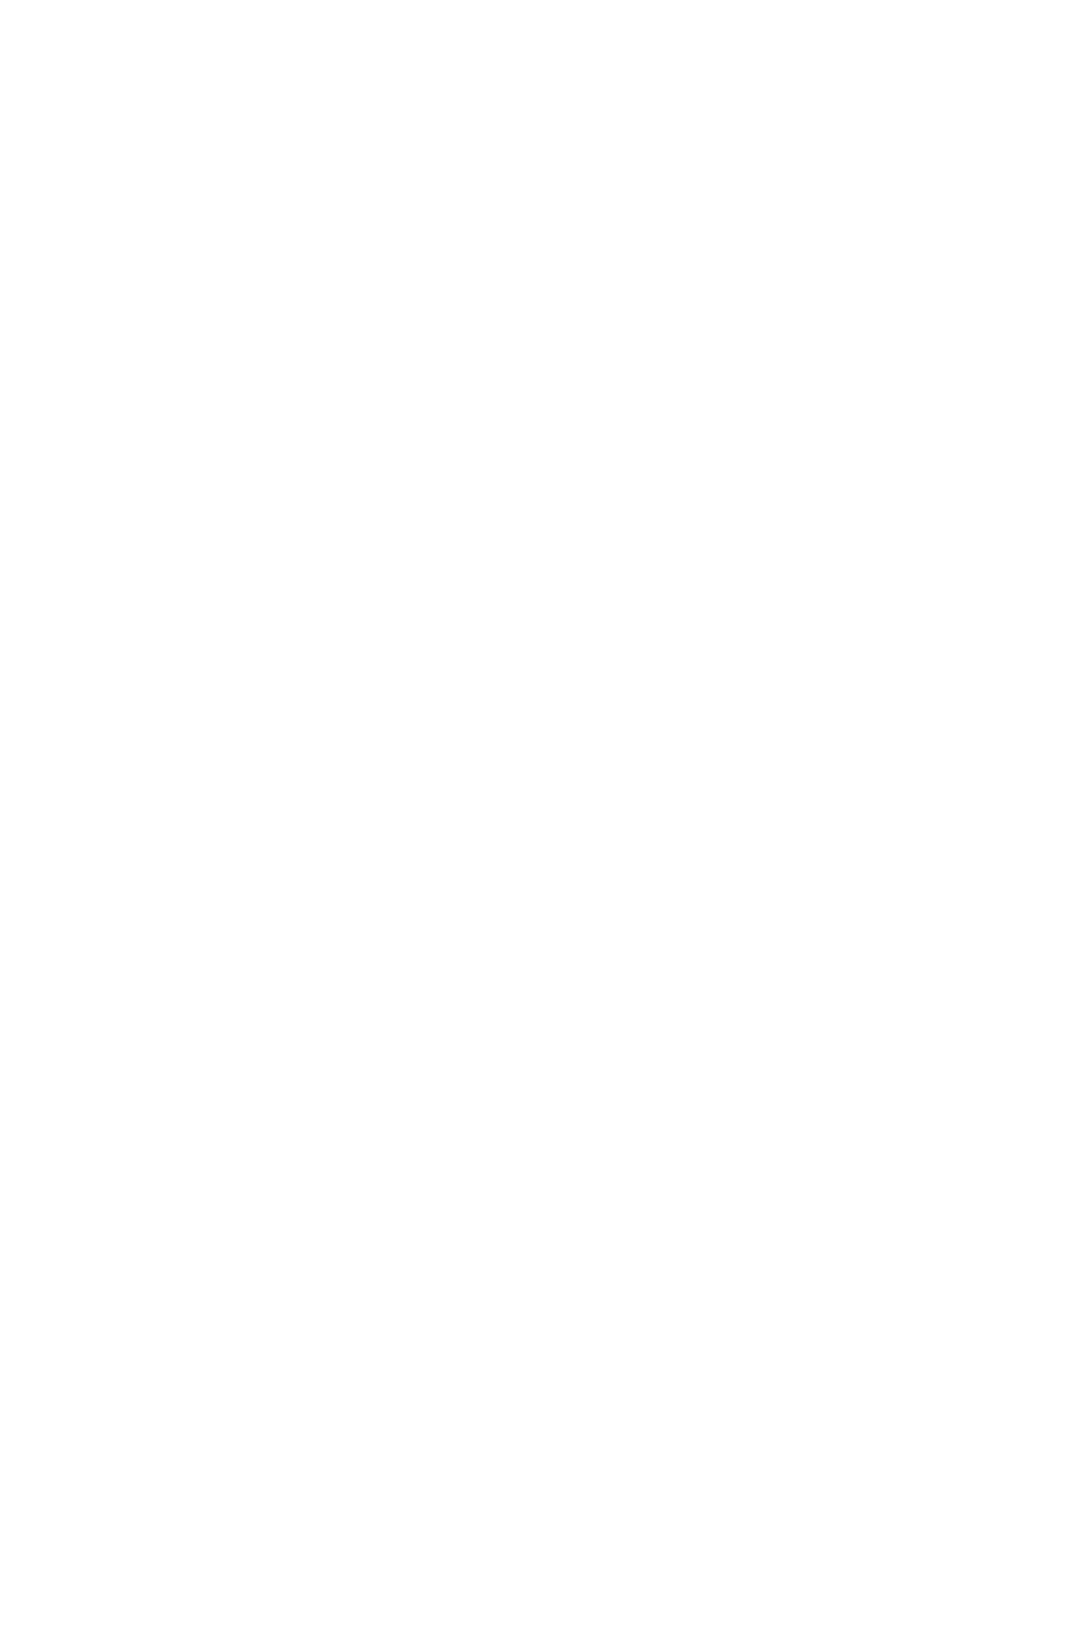 Anthony Llobet Academy